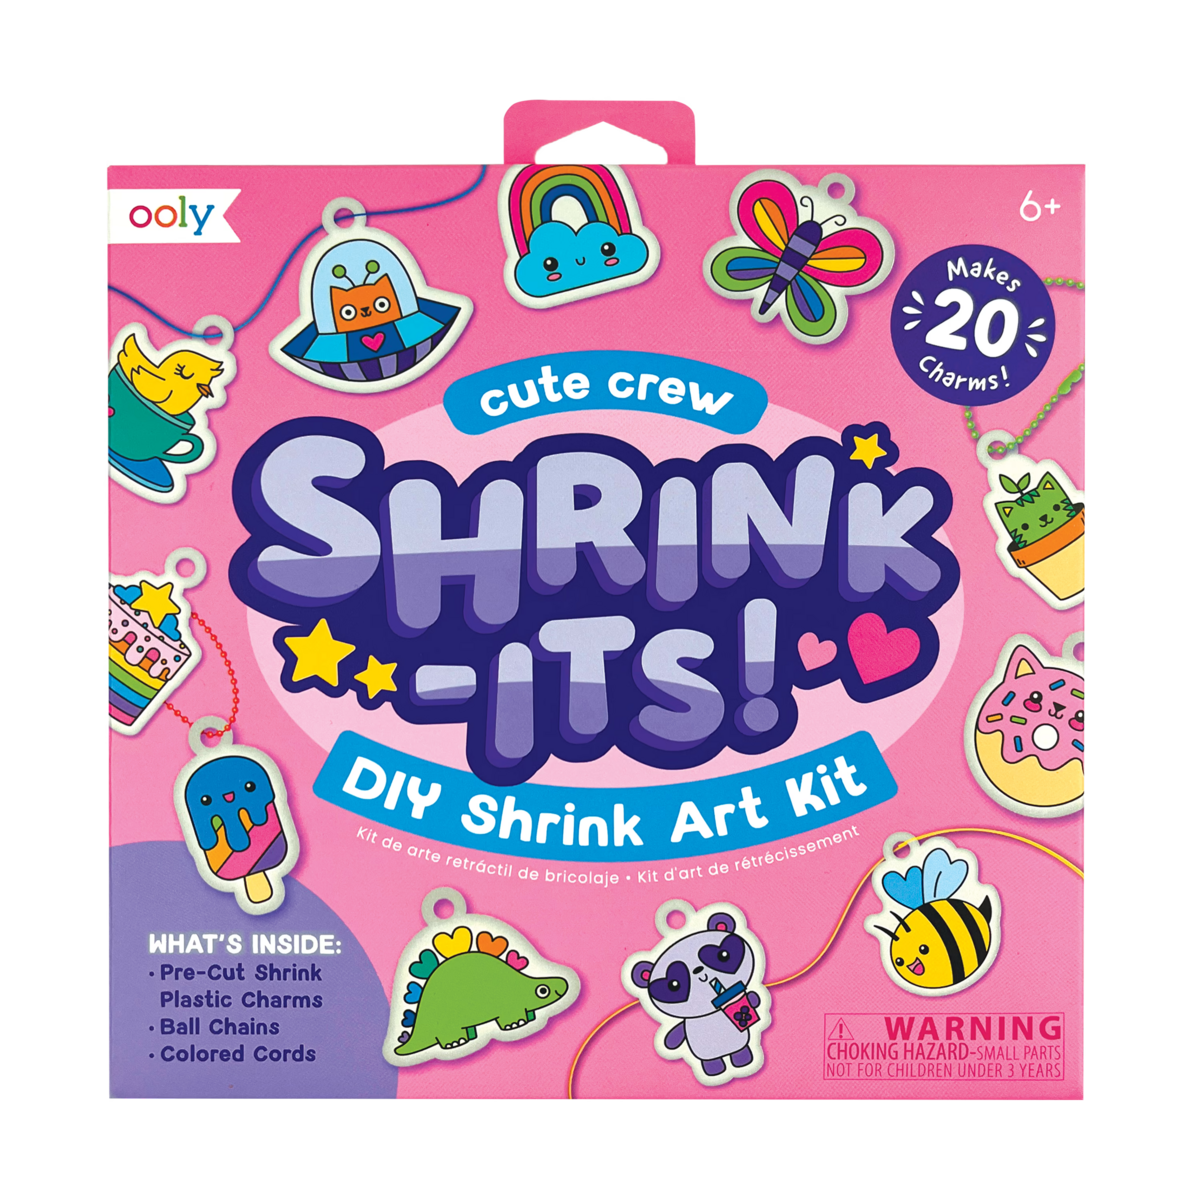 Shrink-its! DIY Shrink Art Kit - Cute Crew - OOLY